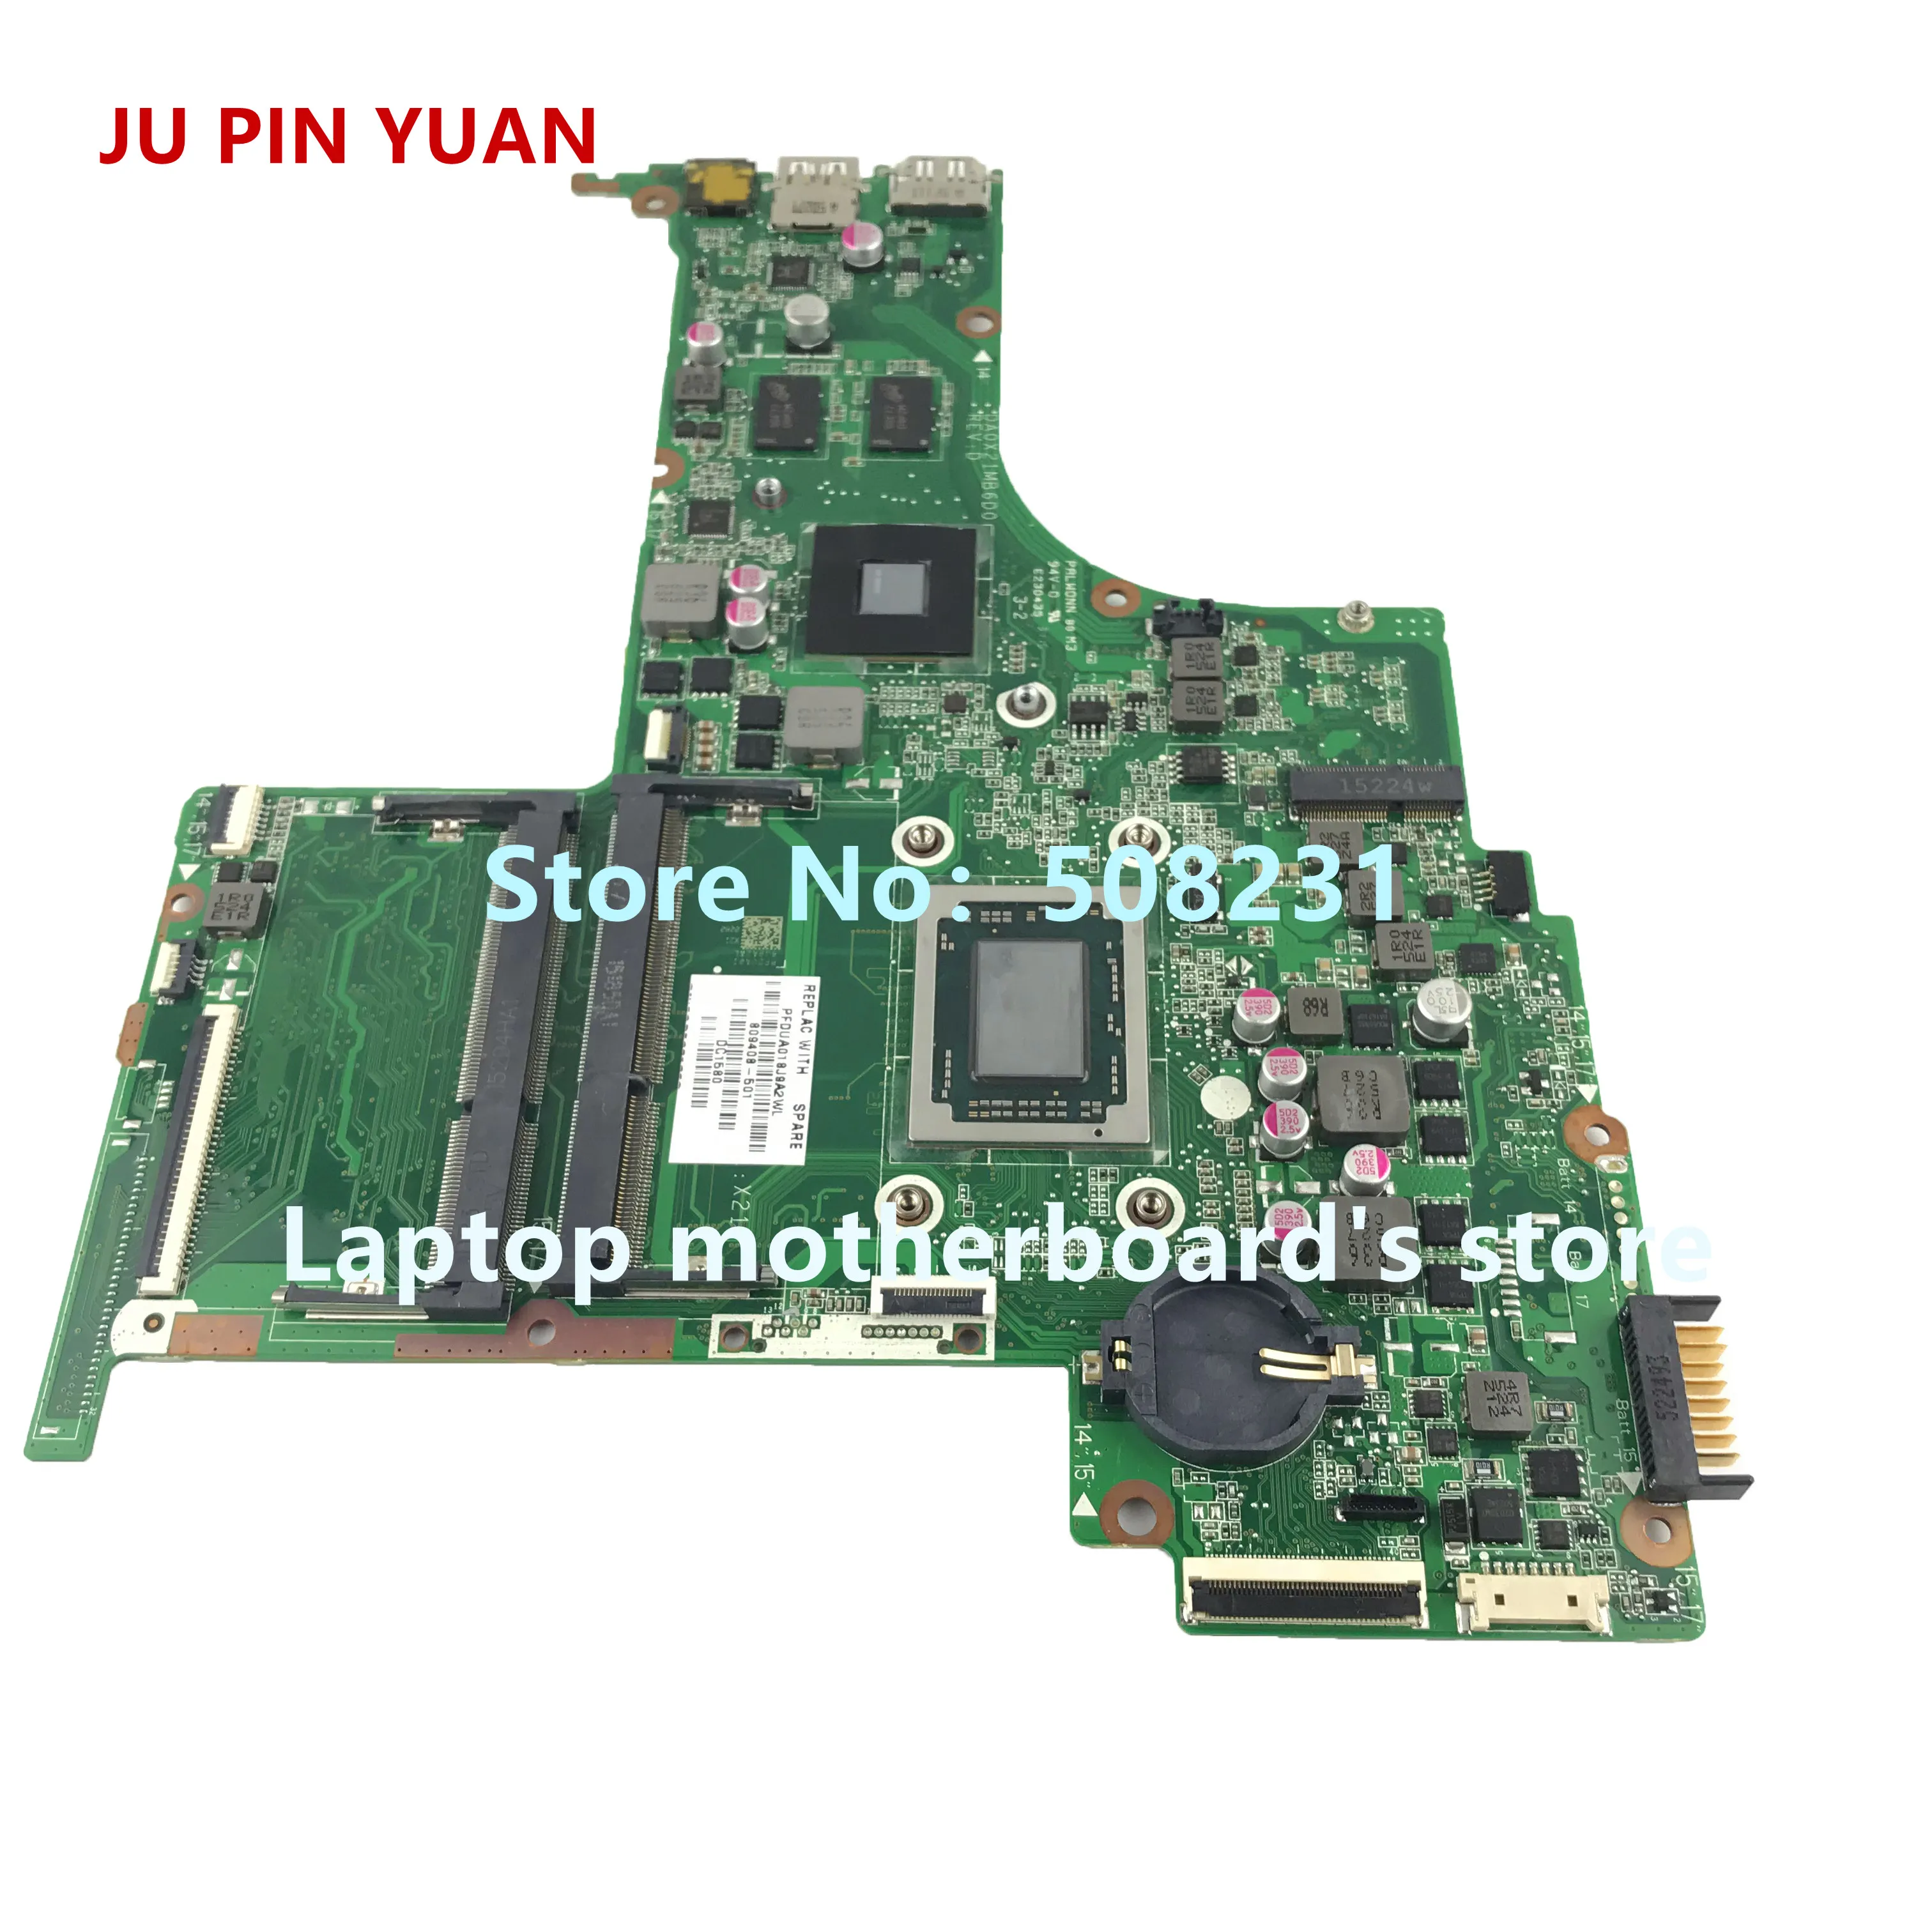 Ju pin yuan 809408-501 809408-601 809408-001 аккумулятор большой емкости DA0X21MB6D0 X21 для hp павильон 15-AB 15Z-AB материнская плата с R7M360 2 Гб A10-8700P